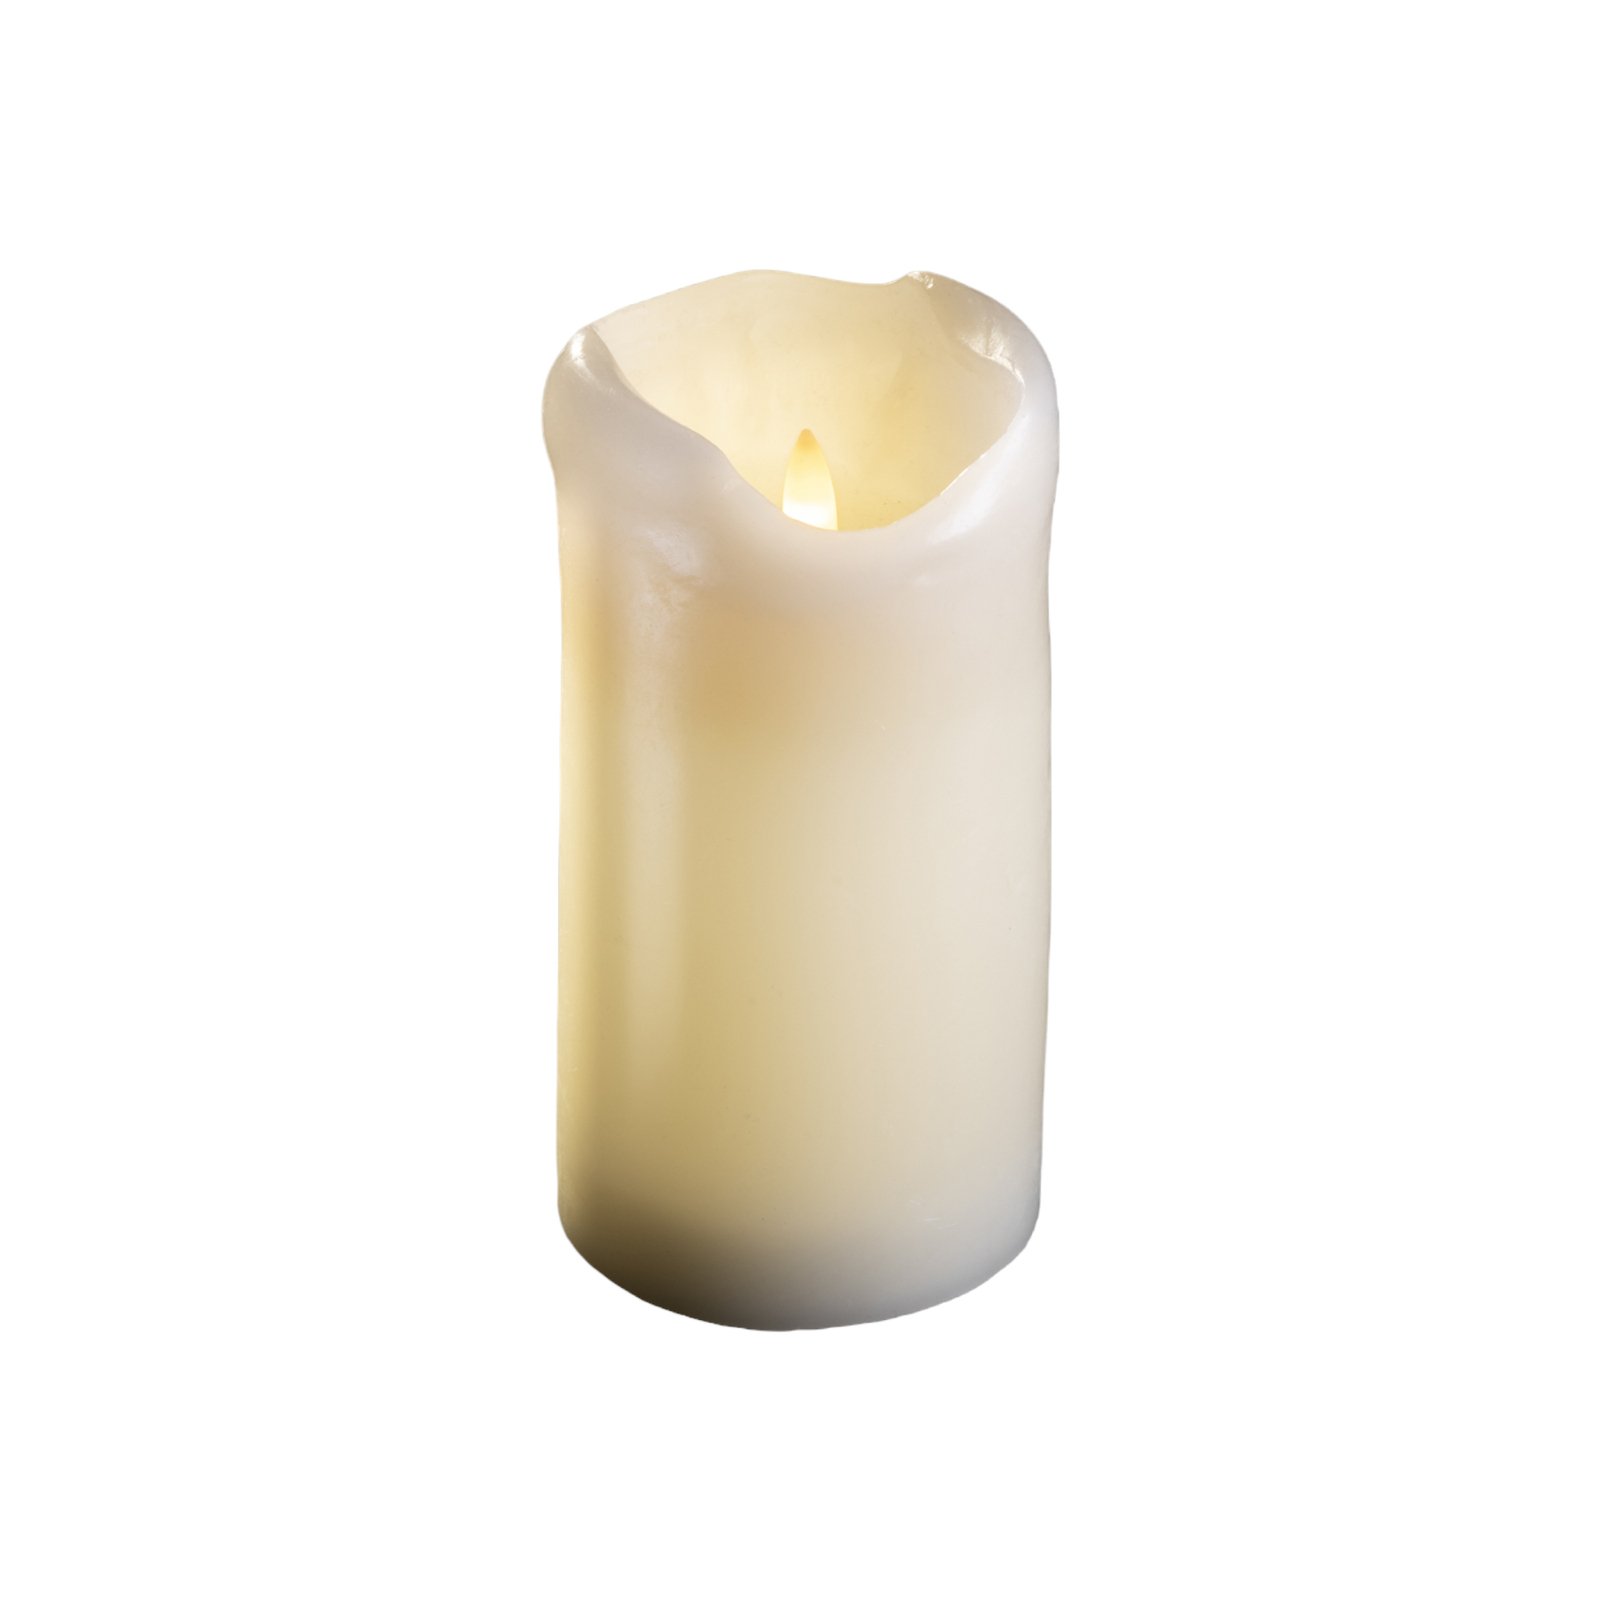 Sterntaler LED candle wax ivory 15 cm high